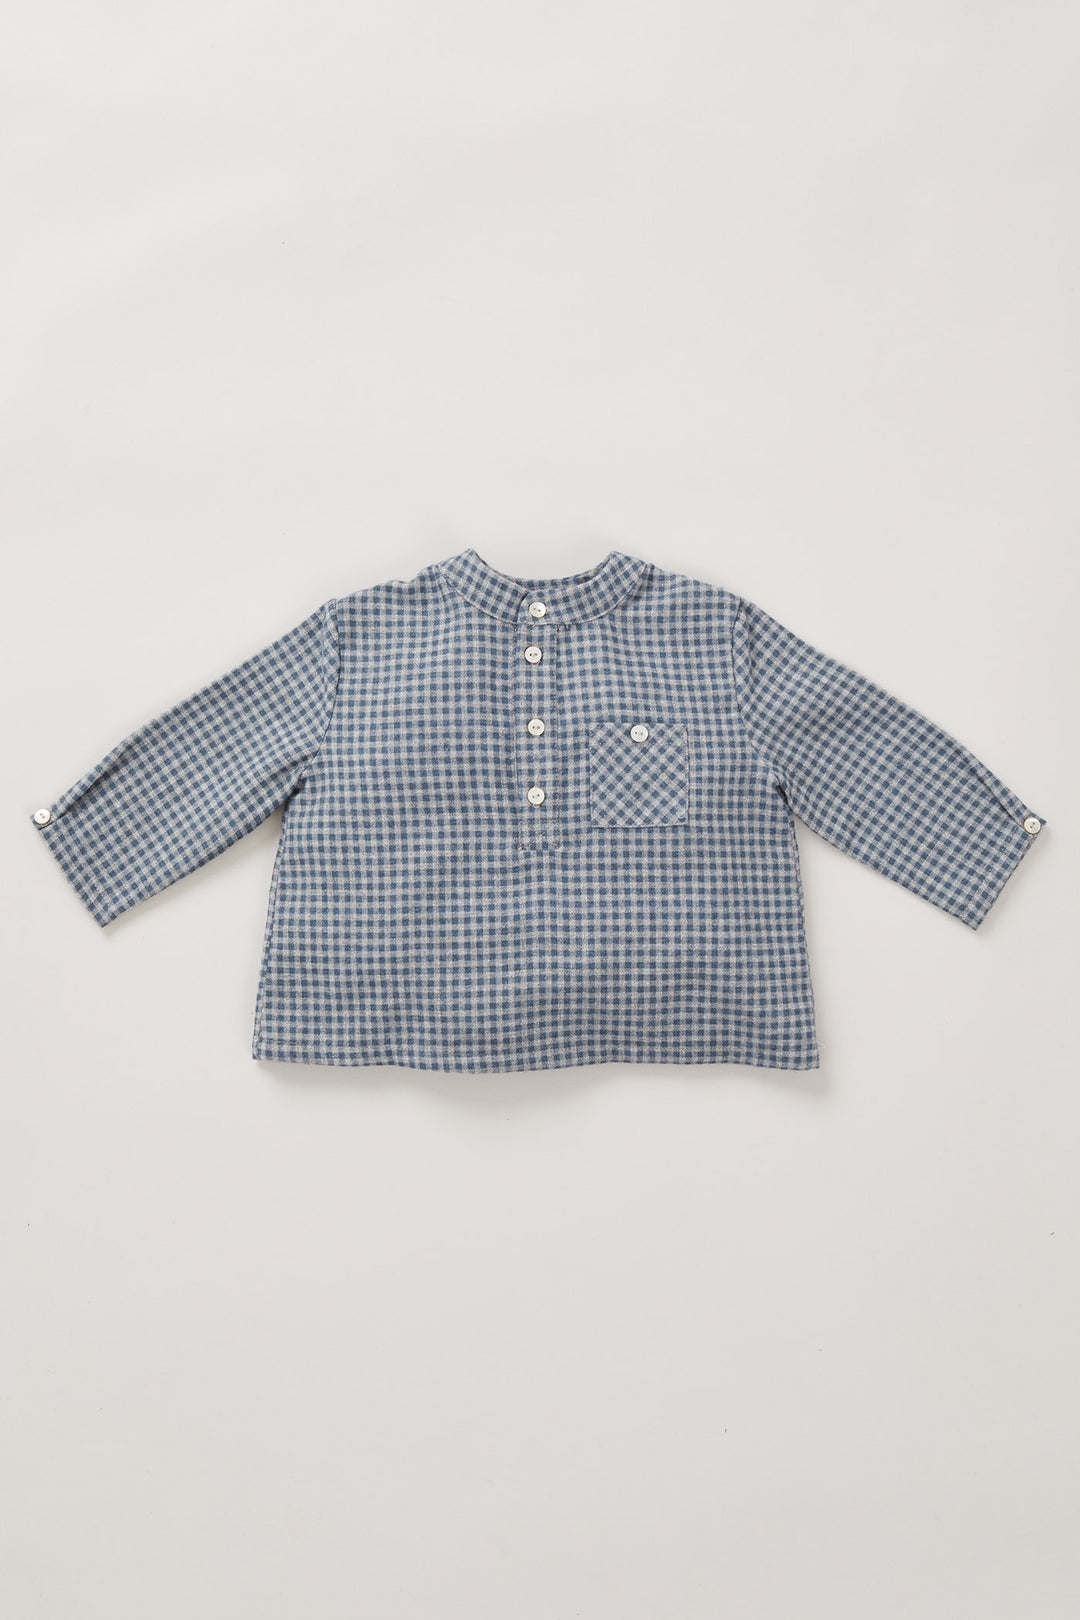 Grey Blue Check Baby Apple Shirt